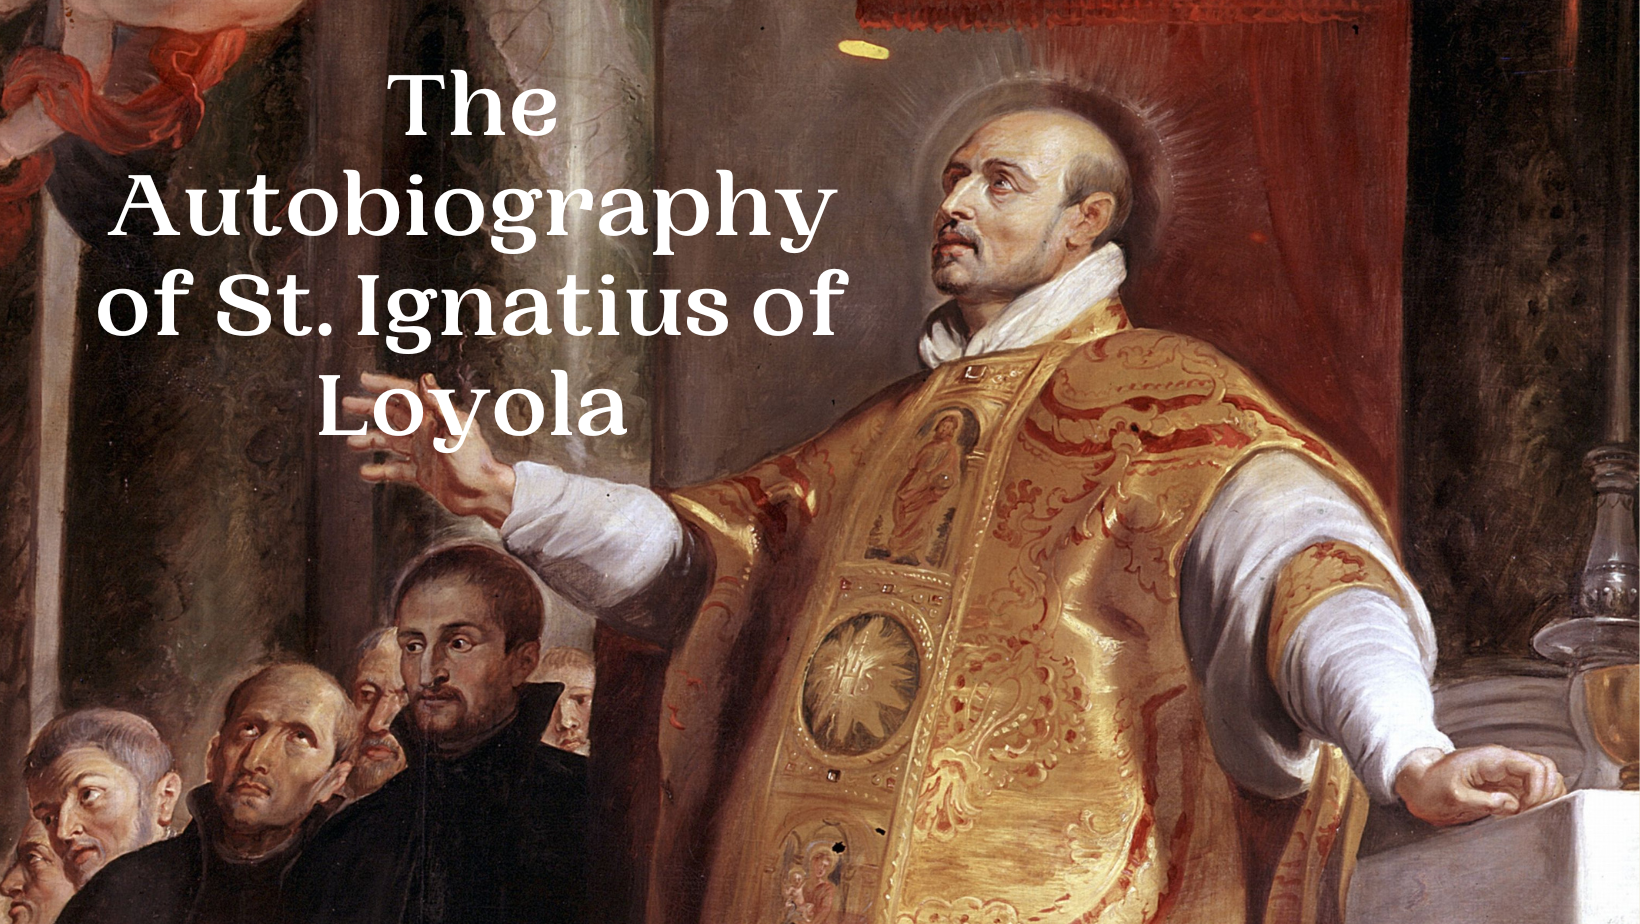 The Autobiography of St. Ignatius of Loyola